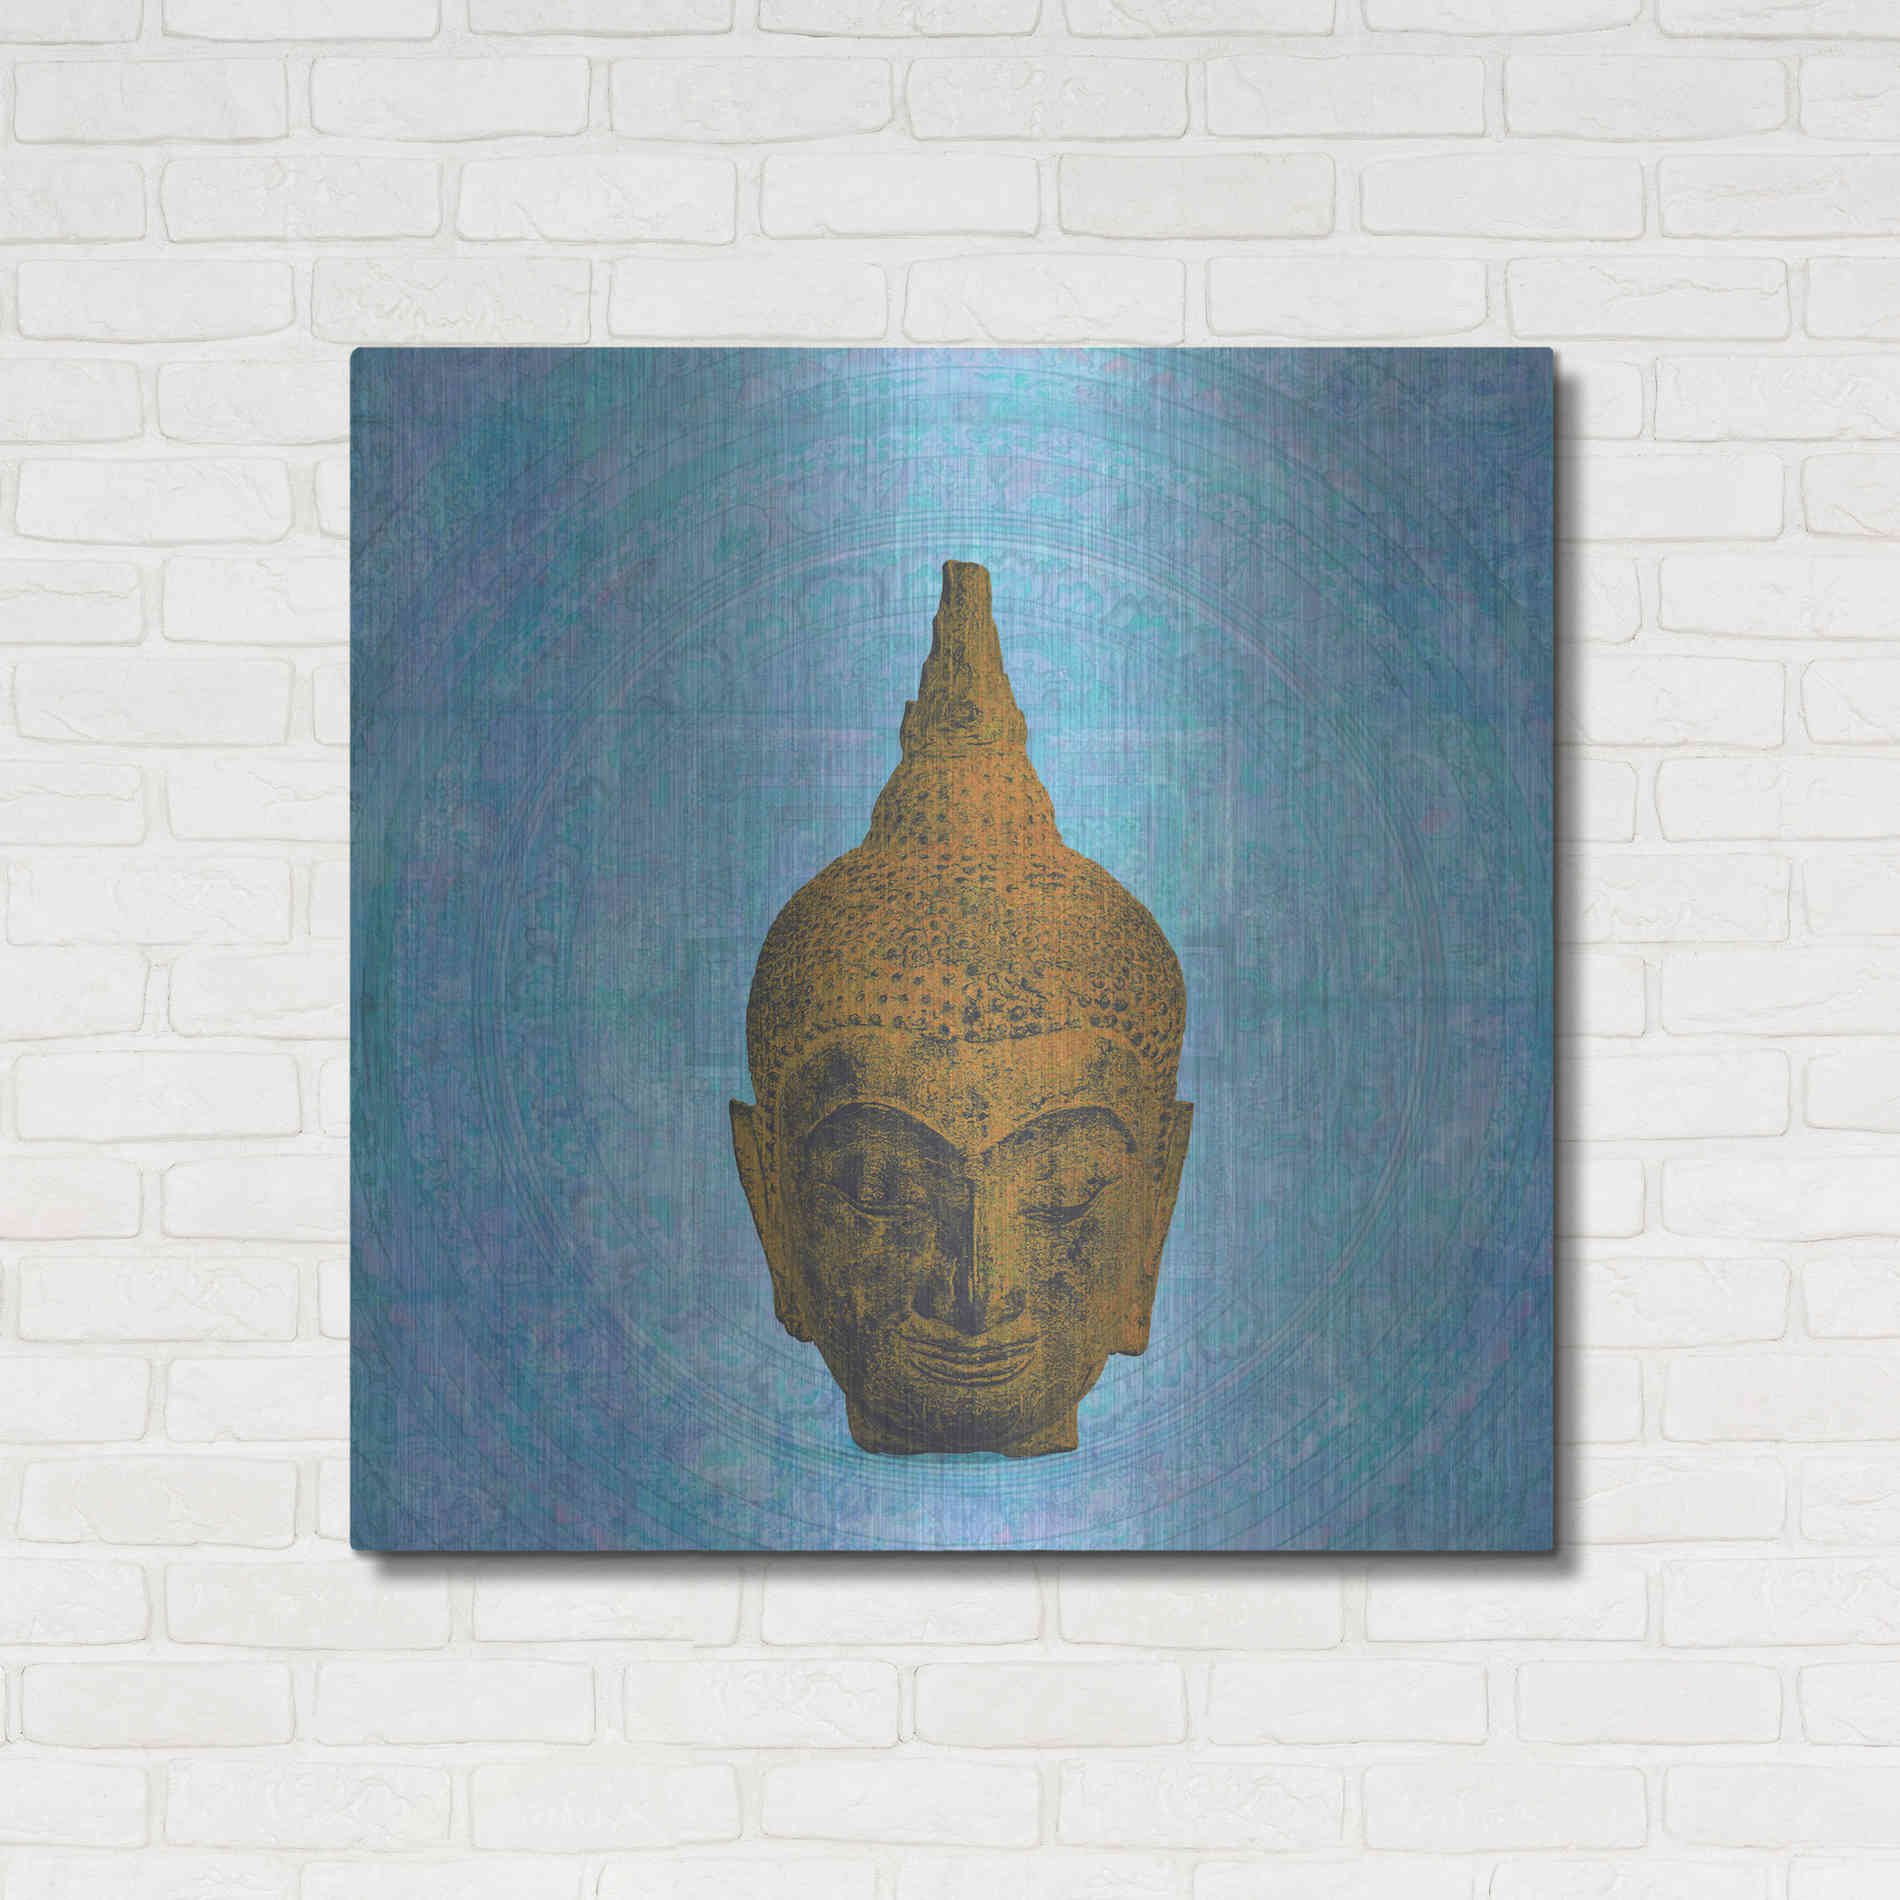 Luxe Metal Art 'Buddha on Blue' by Elena Ray, Metal Wall Art,36x36